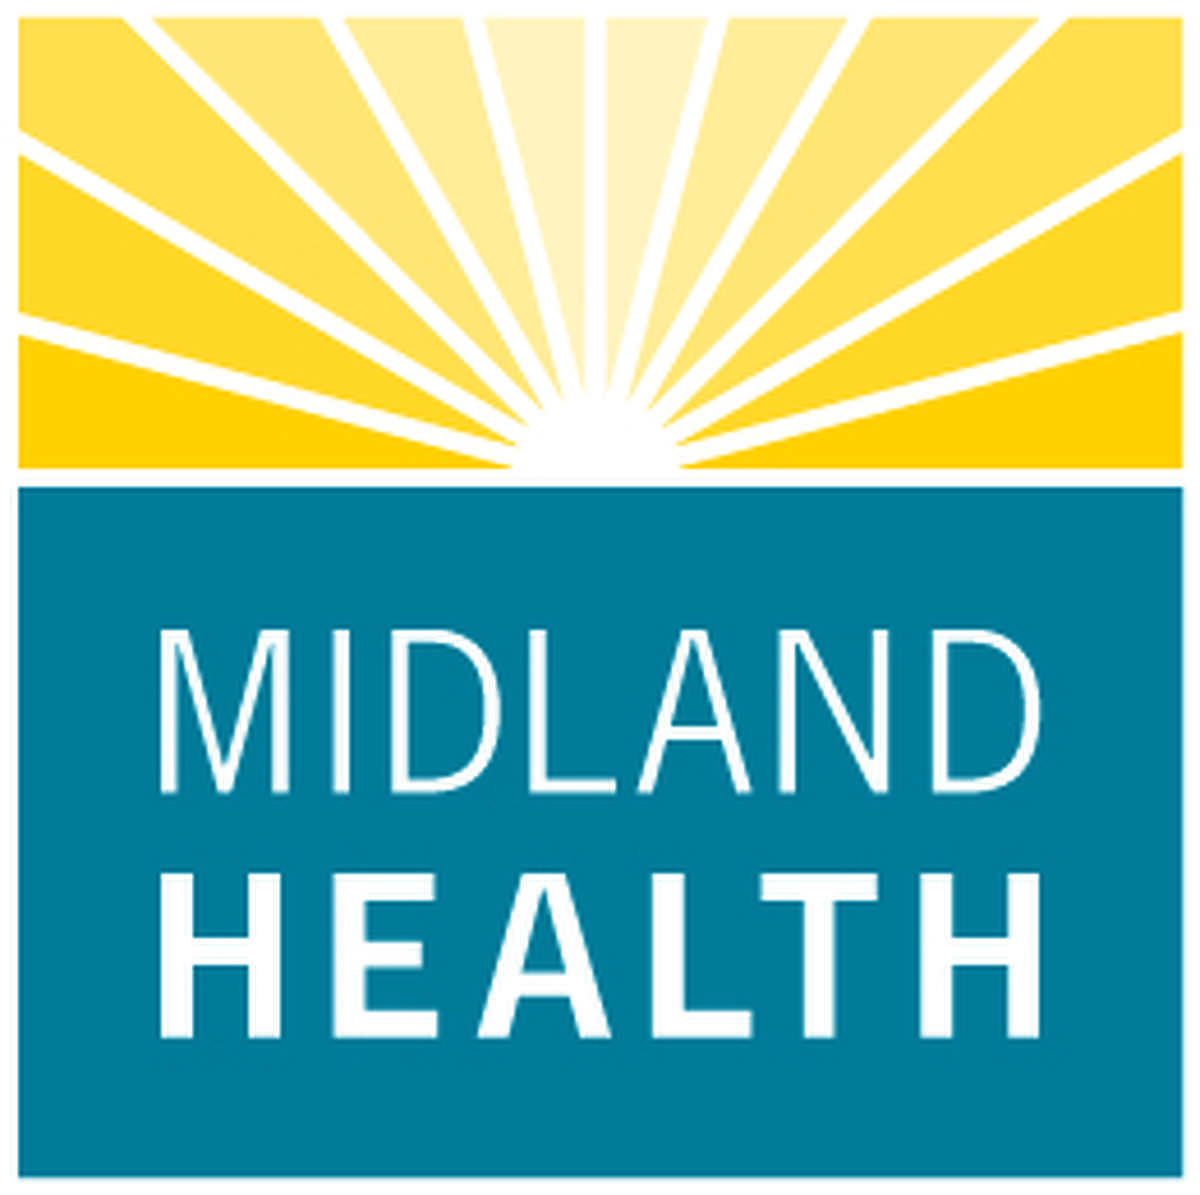 Midland Health logo